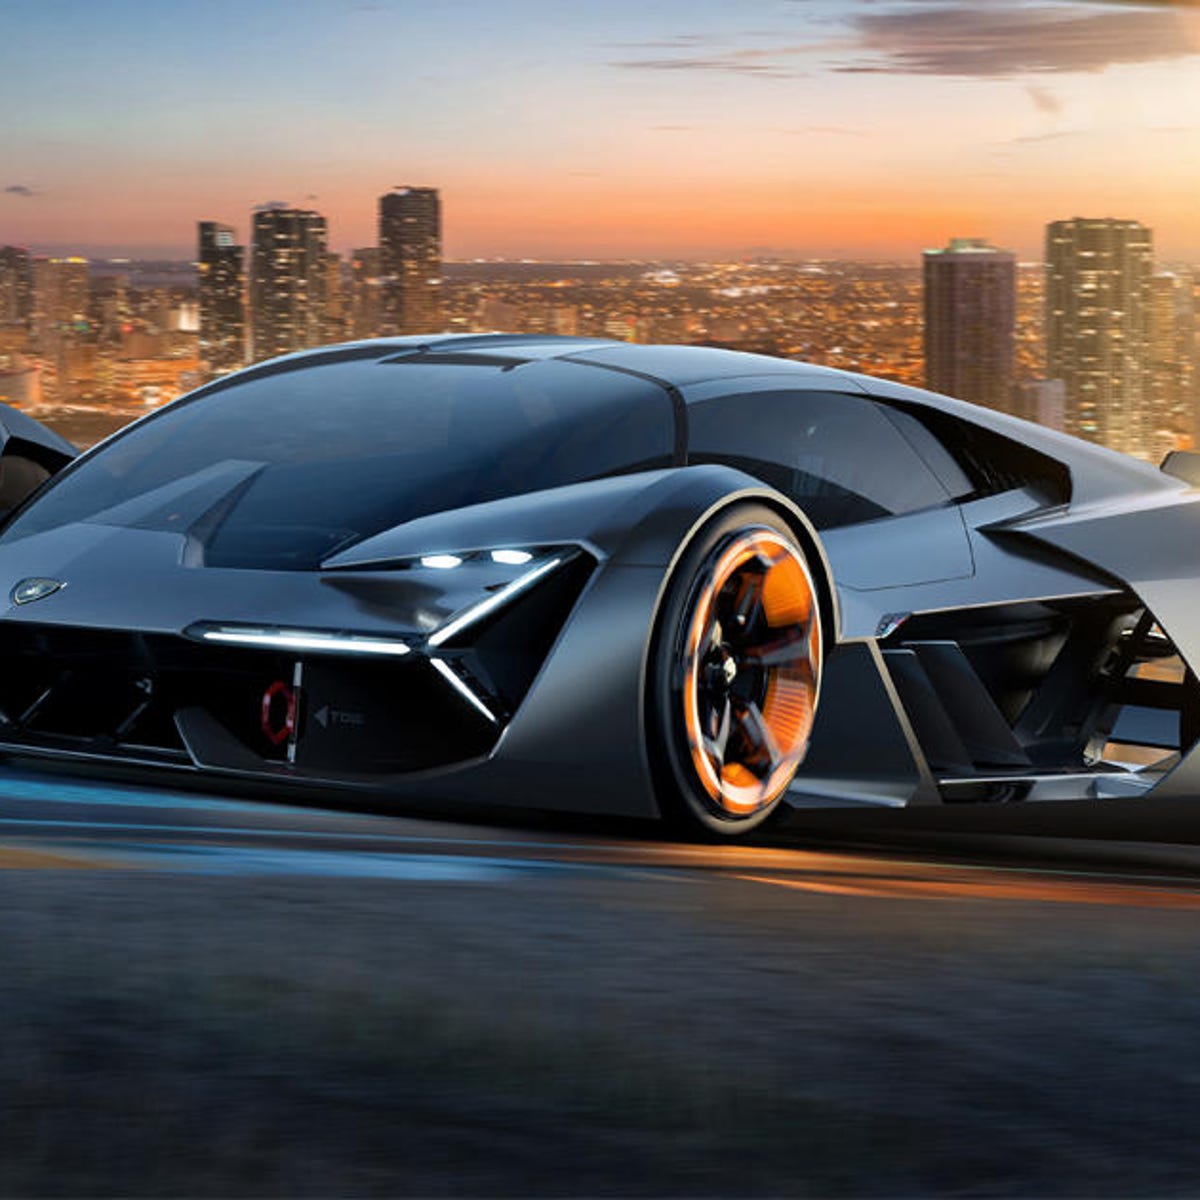 Lamborghini Terzo Millennio is a self-healing supercar from the